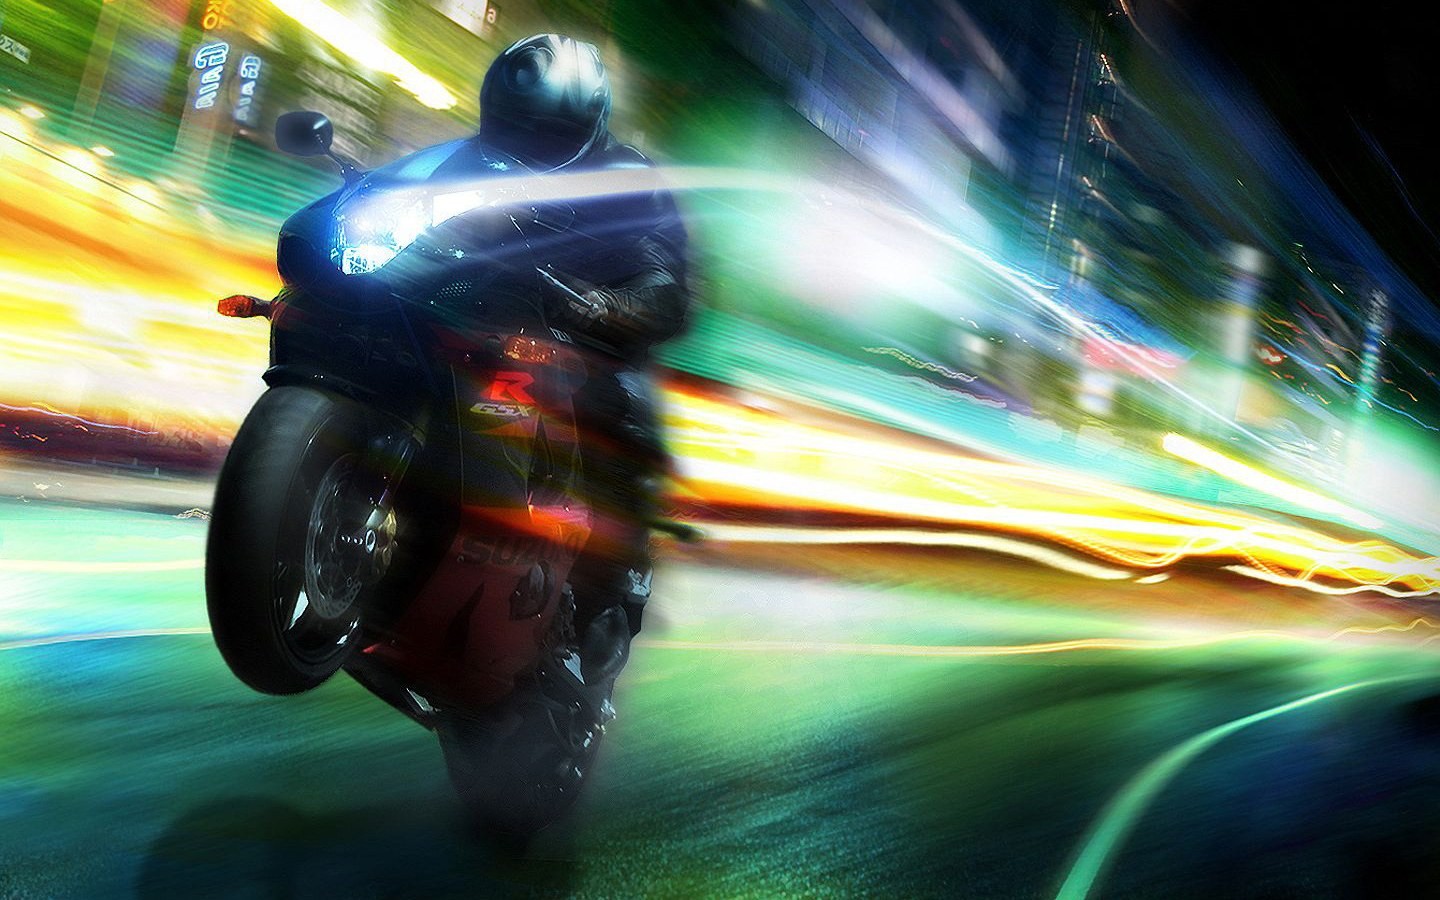 General 1440x900 long exposure streaks motion blur light trails vehicle driving digital art racing motorcycle artwork